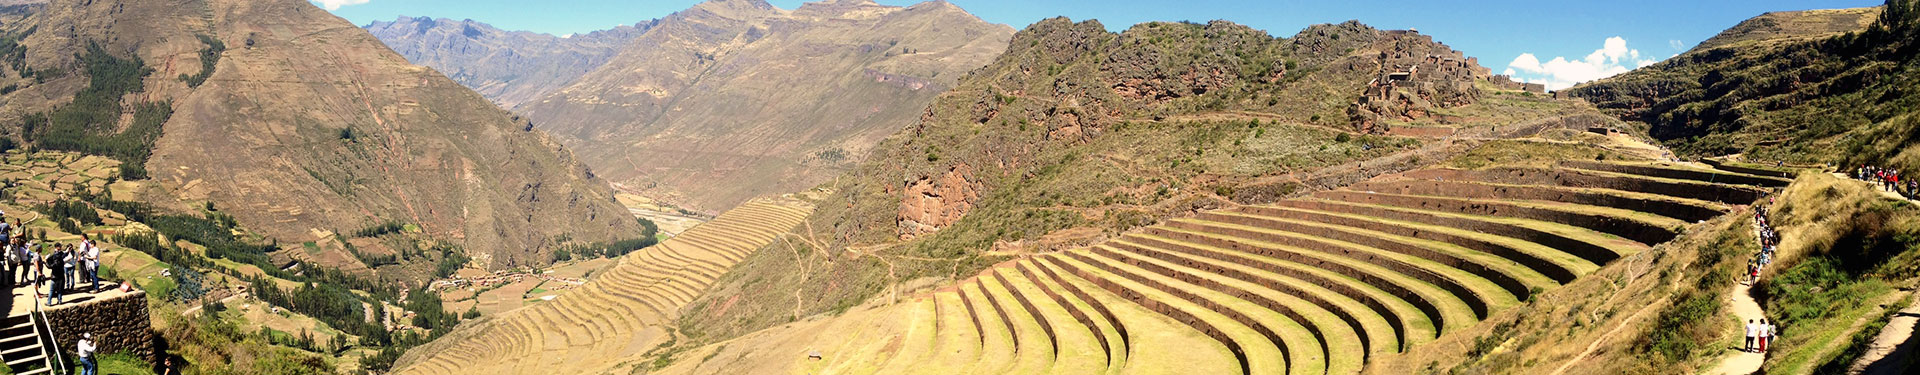 Community Based Trekking From Cusco To Machu Picchu